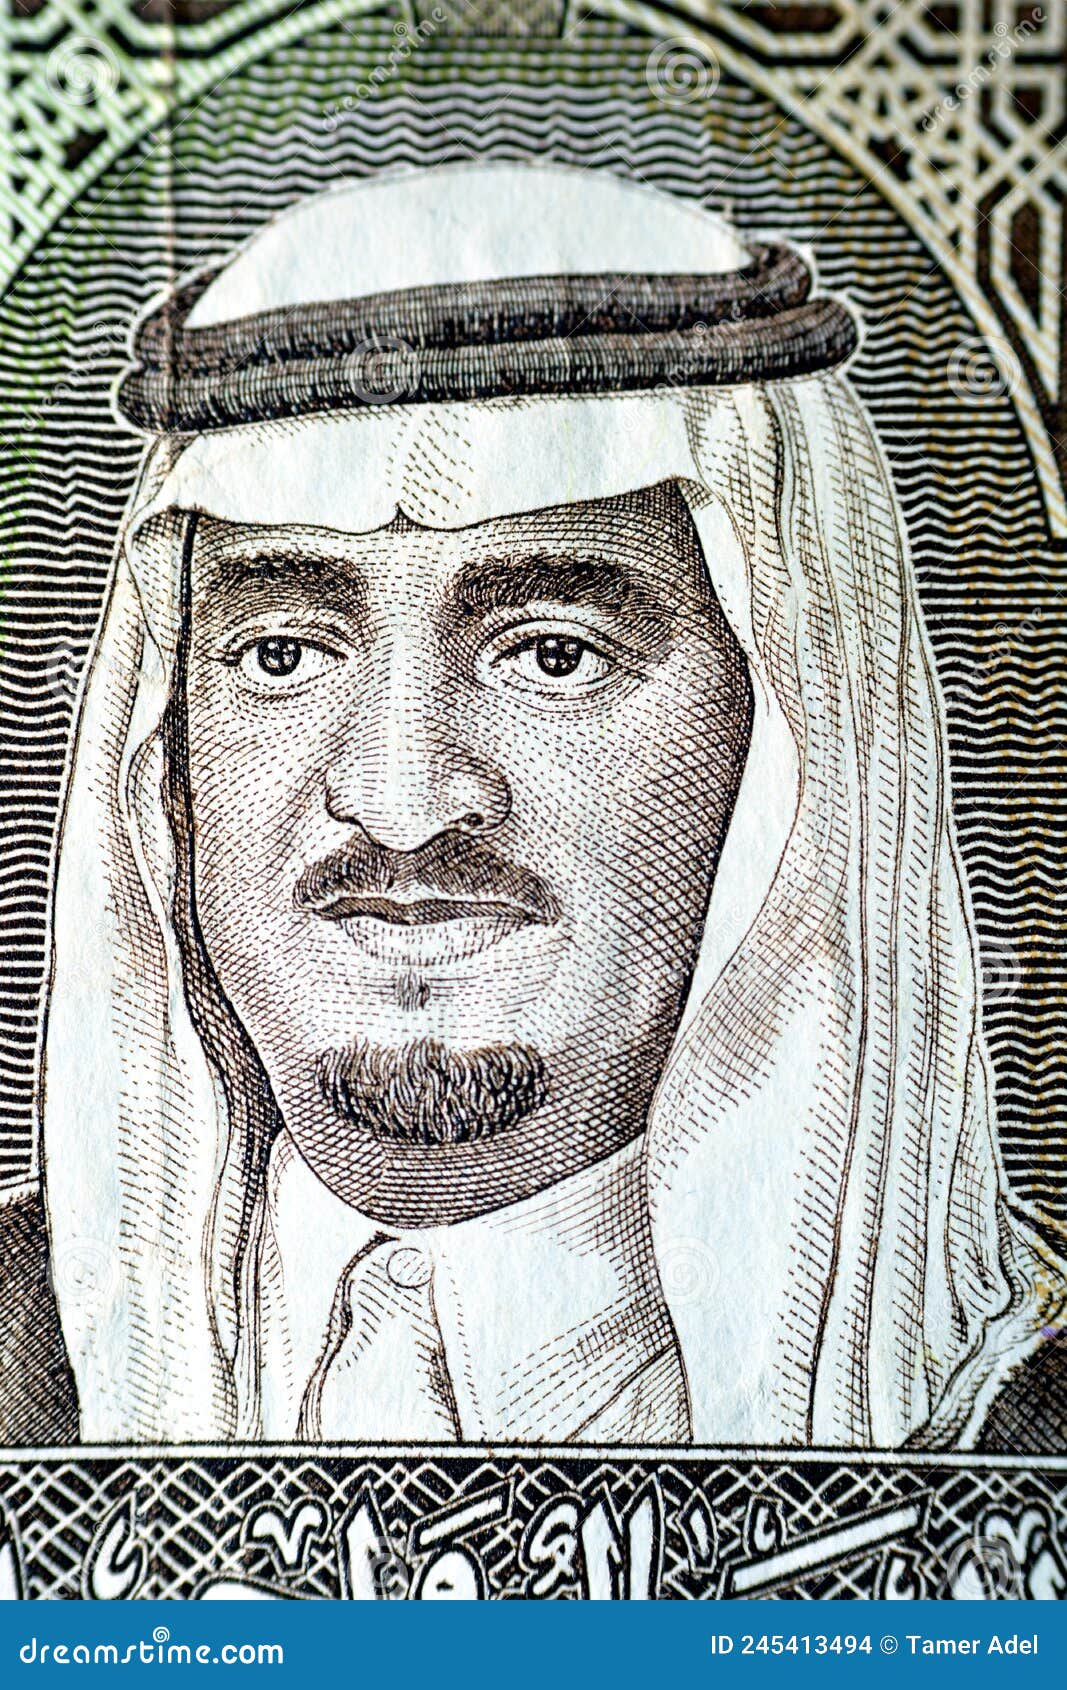 a portrait of fahd bin abdulaziz al saud, the former king of saudi arabia kingdom from the obverse side of 1 one saudi arabia